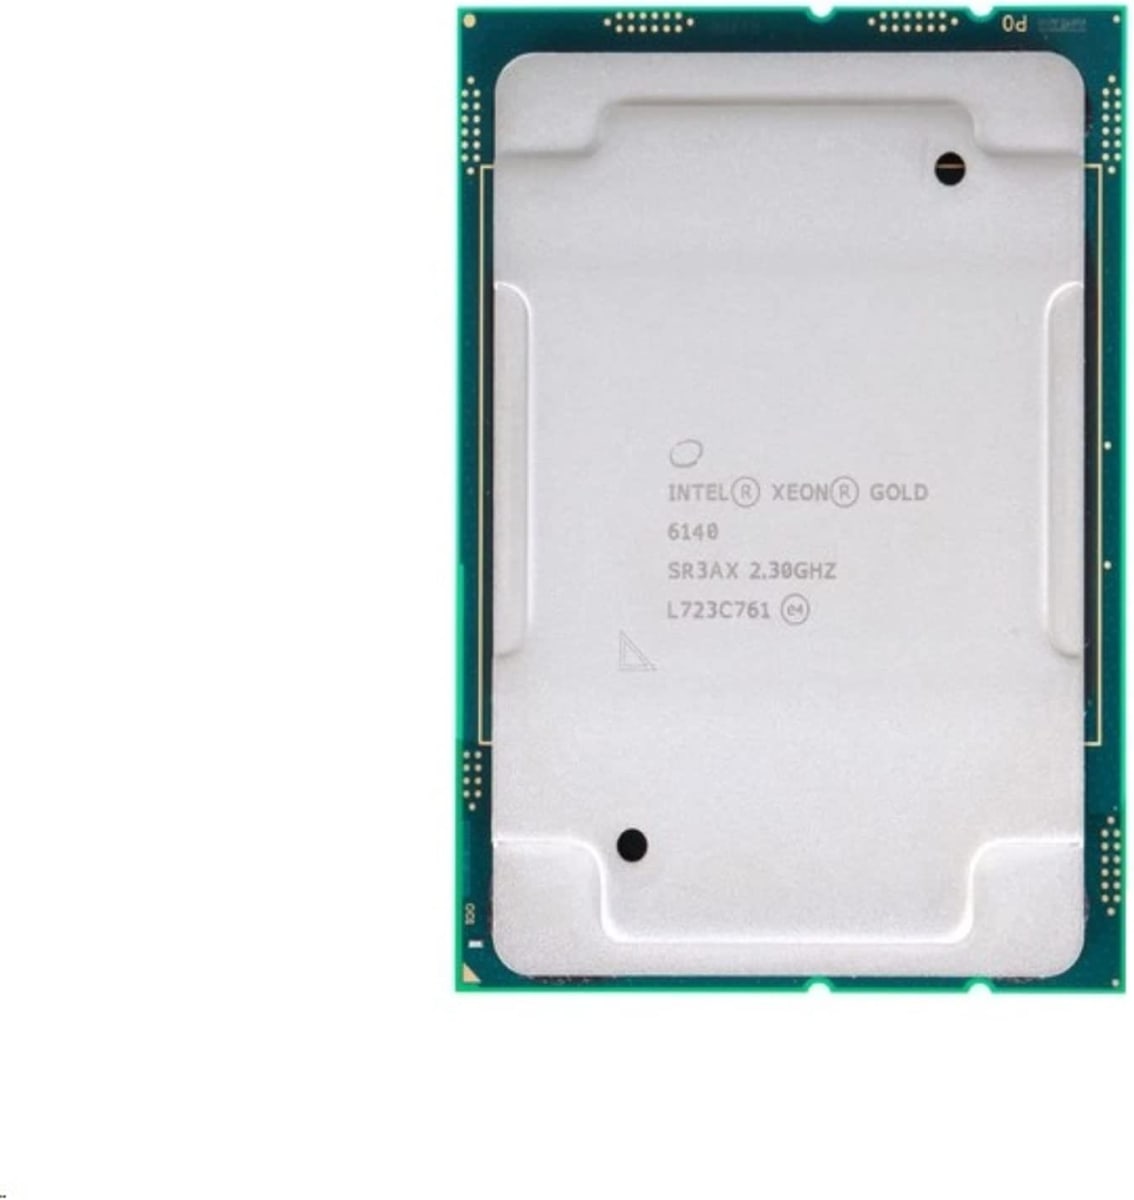 Intel Xeon Gold 6140